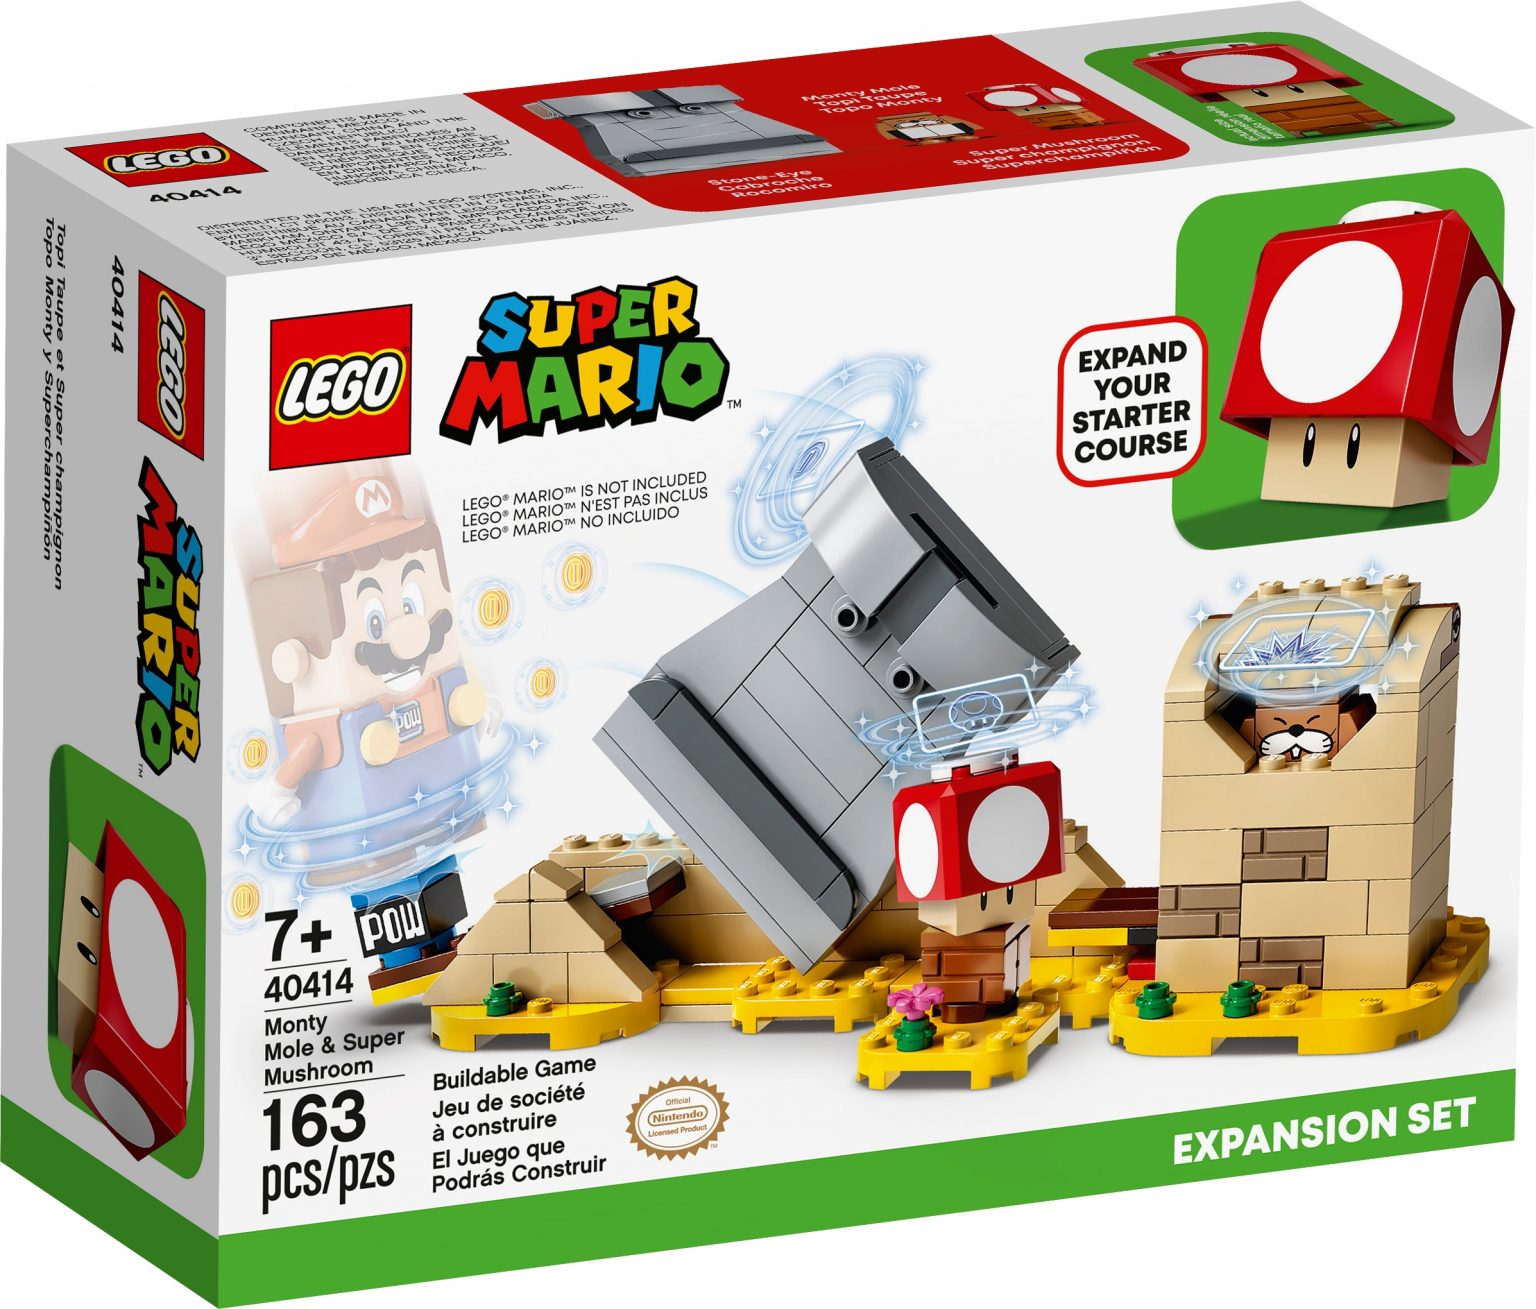 LEGO Super Mario Monty Mole & Super Mushroom Expansion Set (40414) Official Images - The Brick Fan